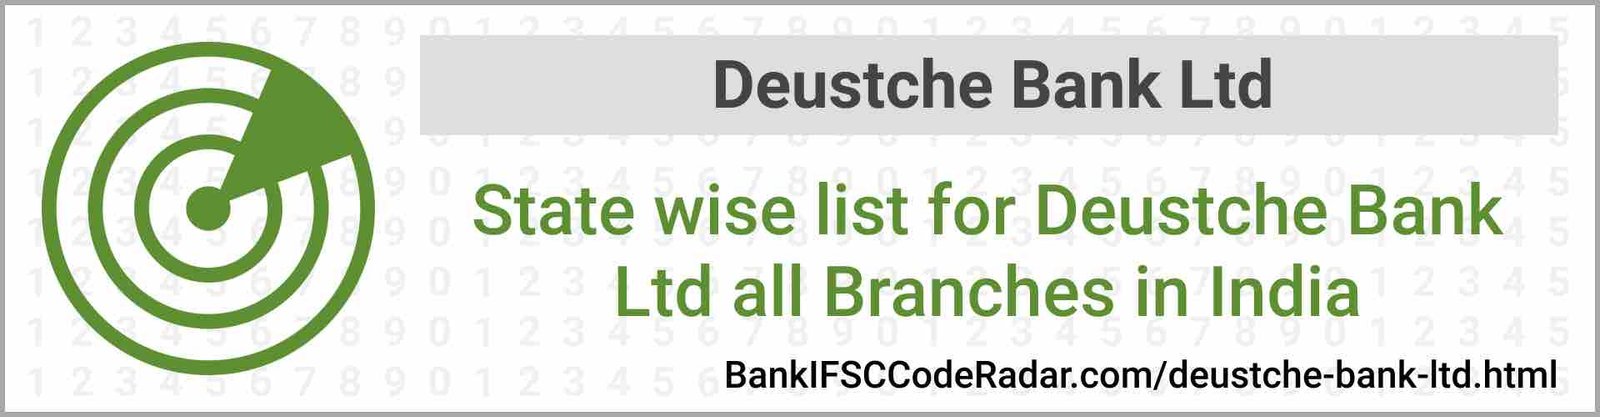 Deustche Bank Ltd All Branches India